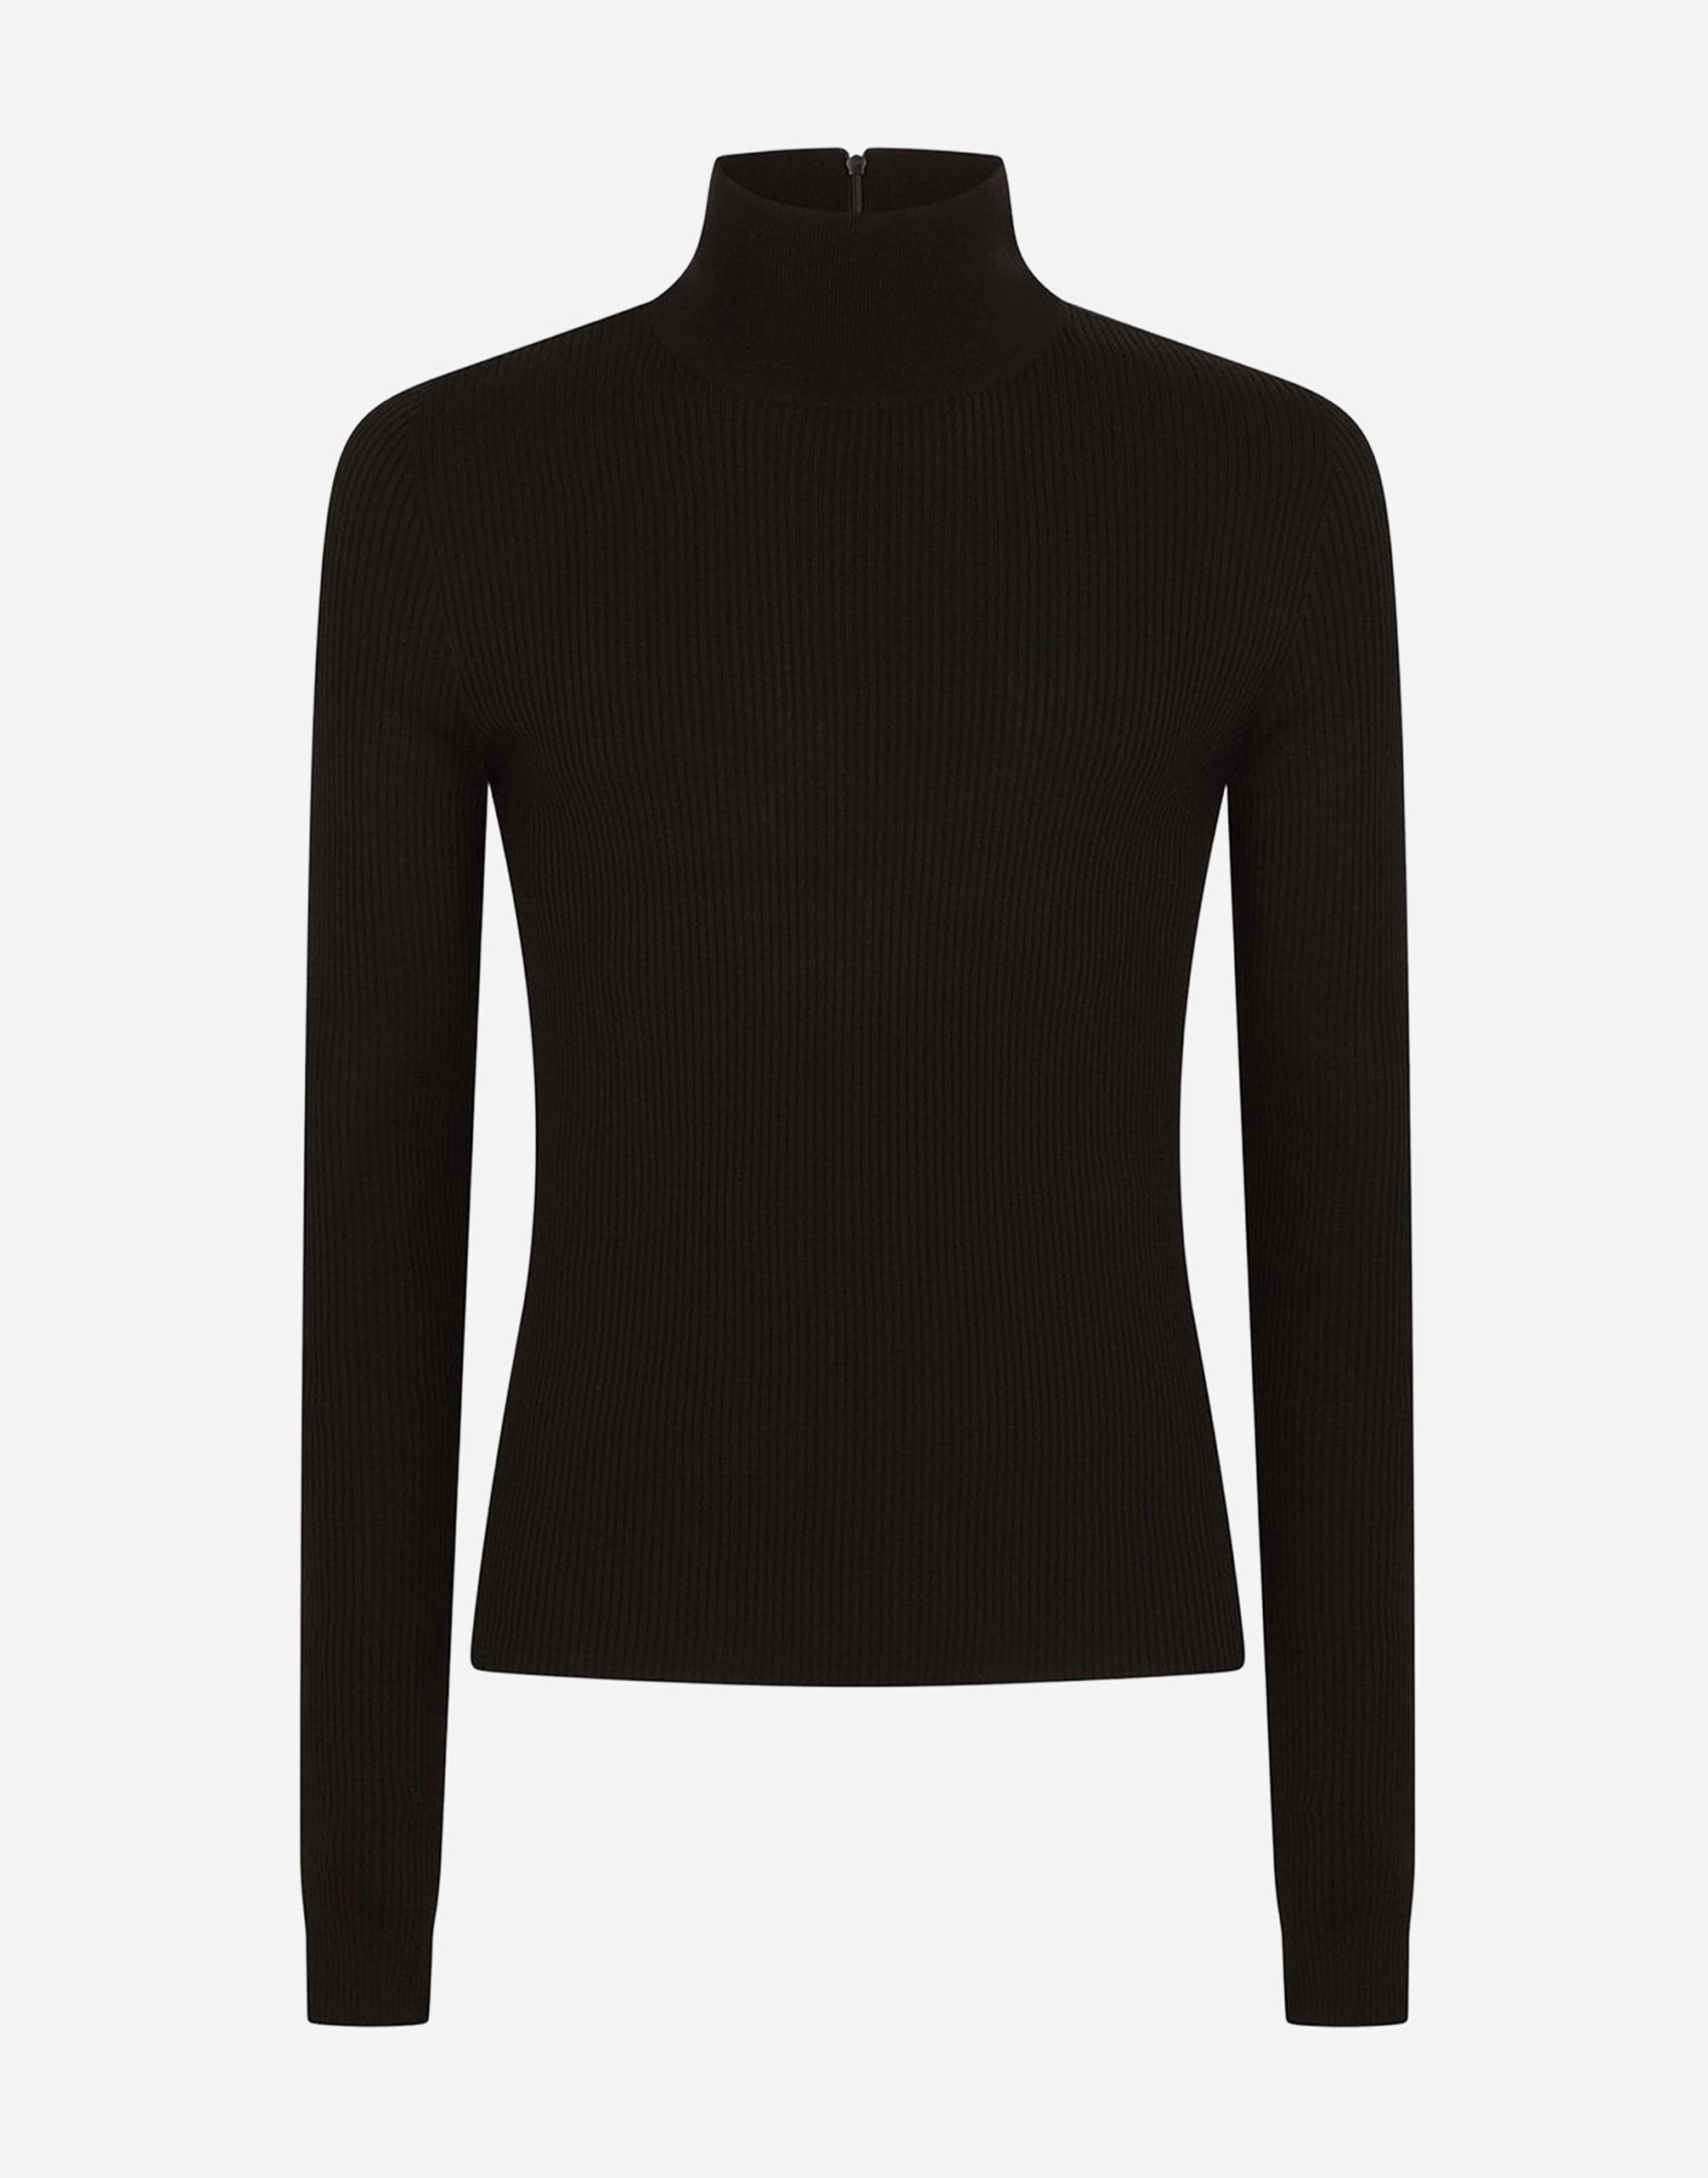 Dolce & Gabbana Ribbed Turtleneck Sweater